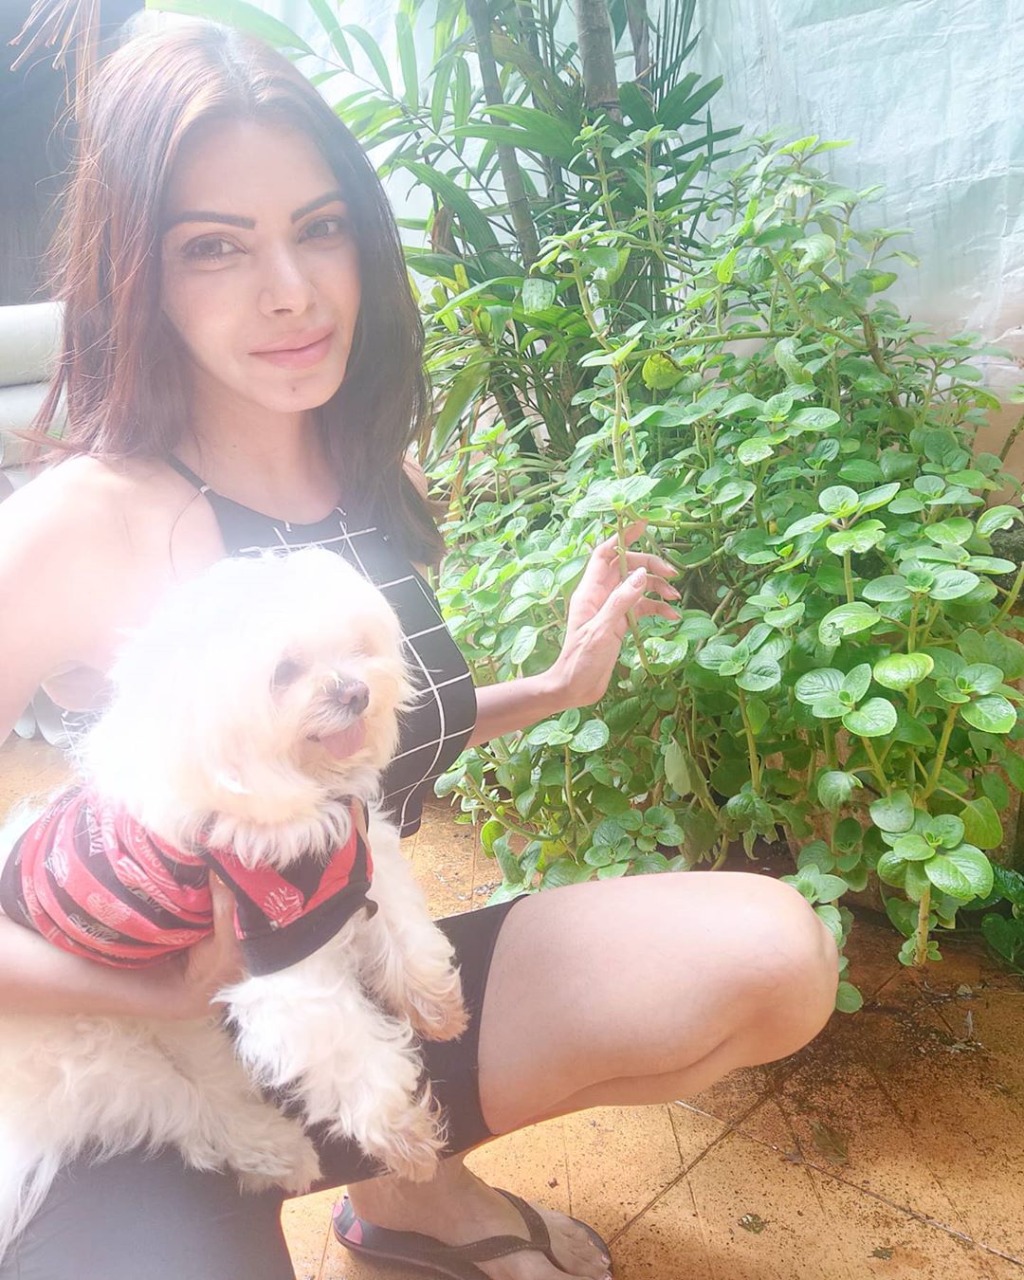 Hot actress Sherlyn Chopra gives a tour of her kitchen garden  